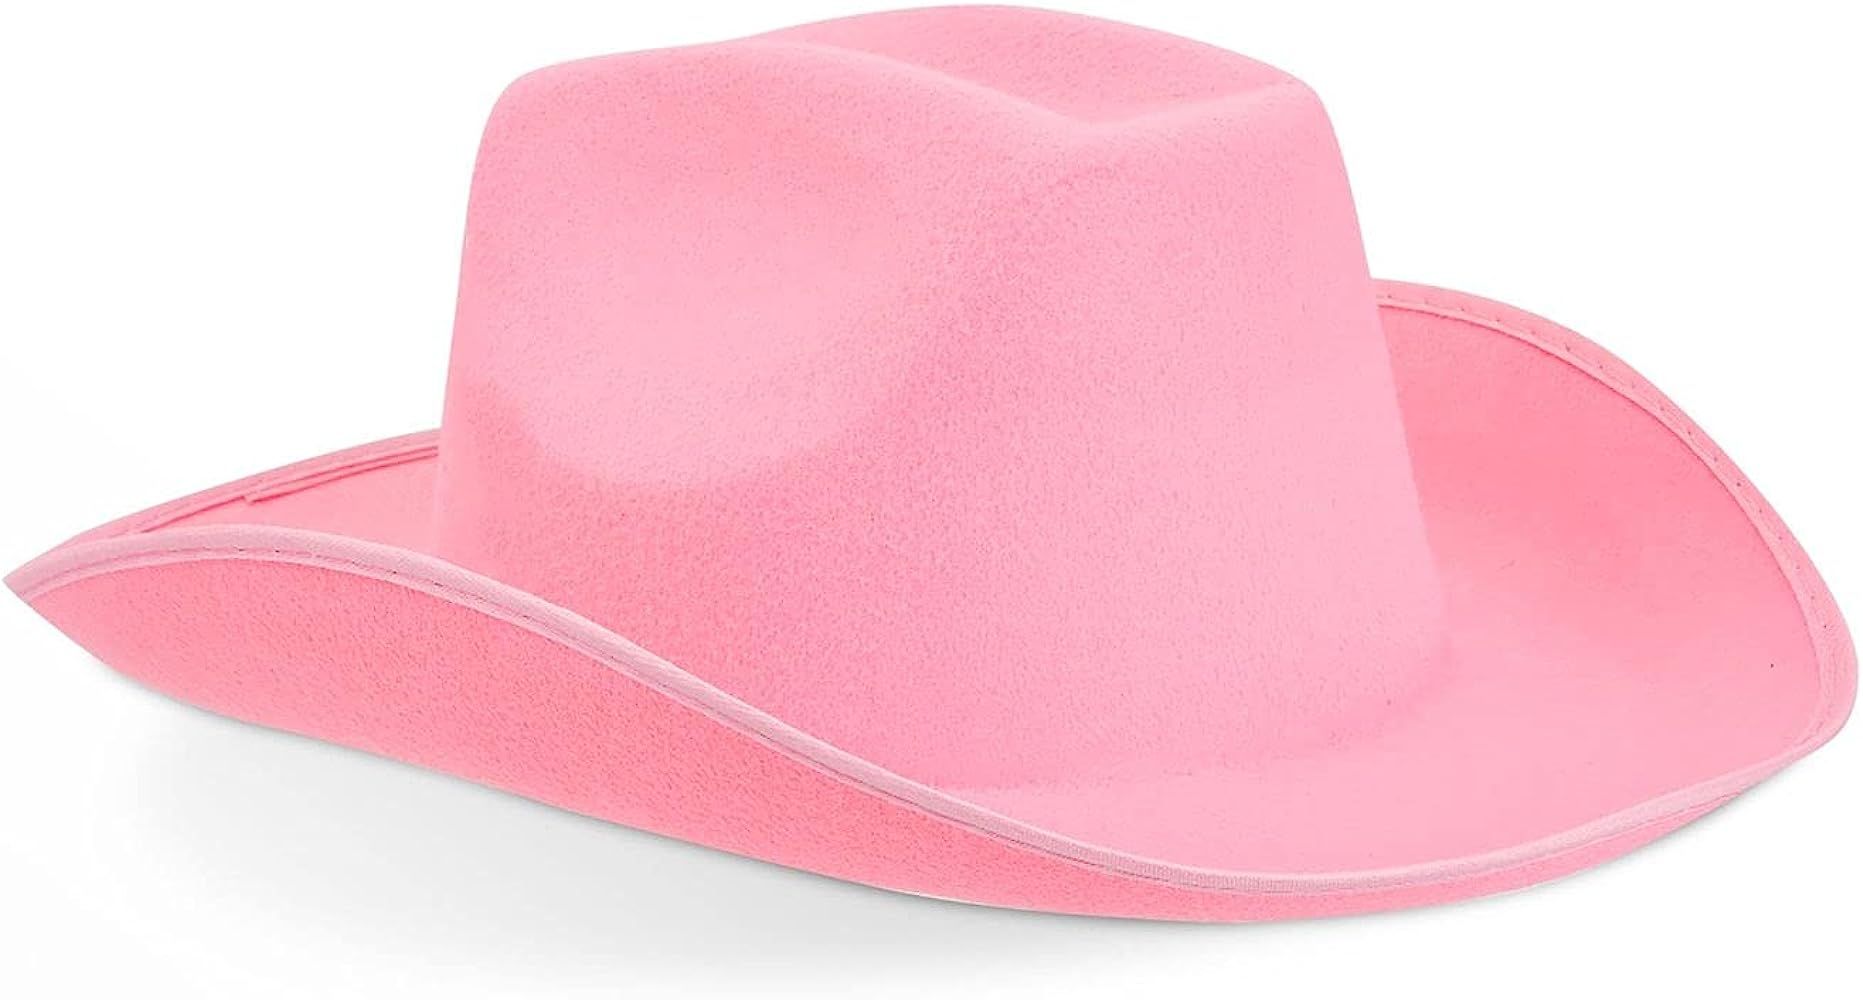 Zodaca Western Felt Cowboy Hat for Men and Women Costume (Adult Size) | Amazon (US)